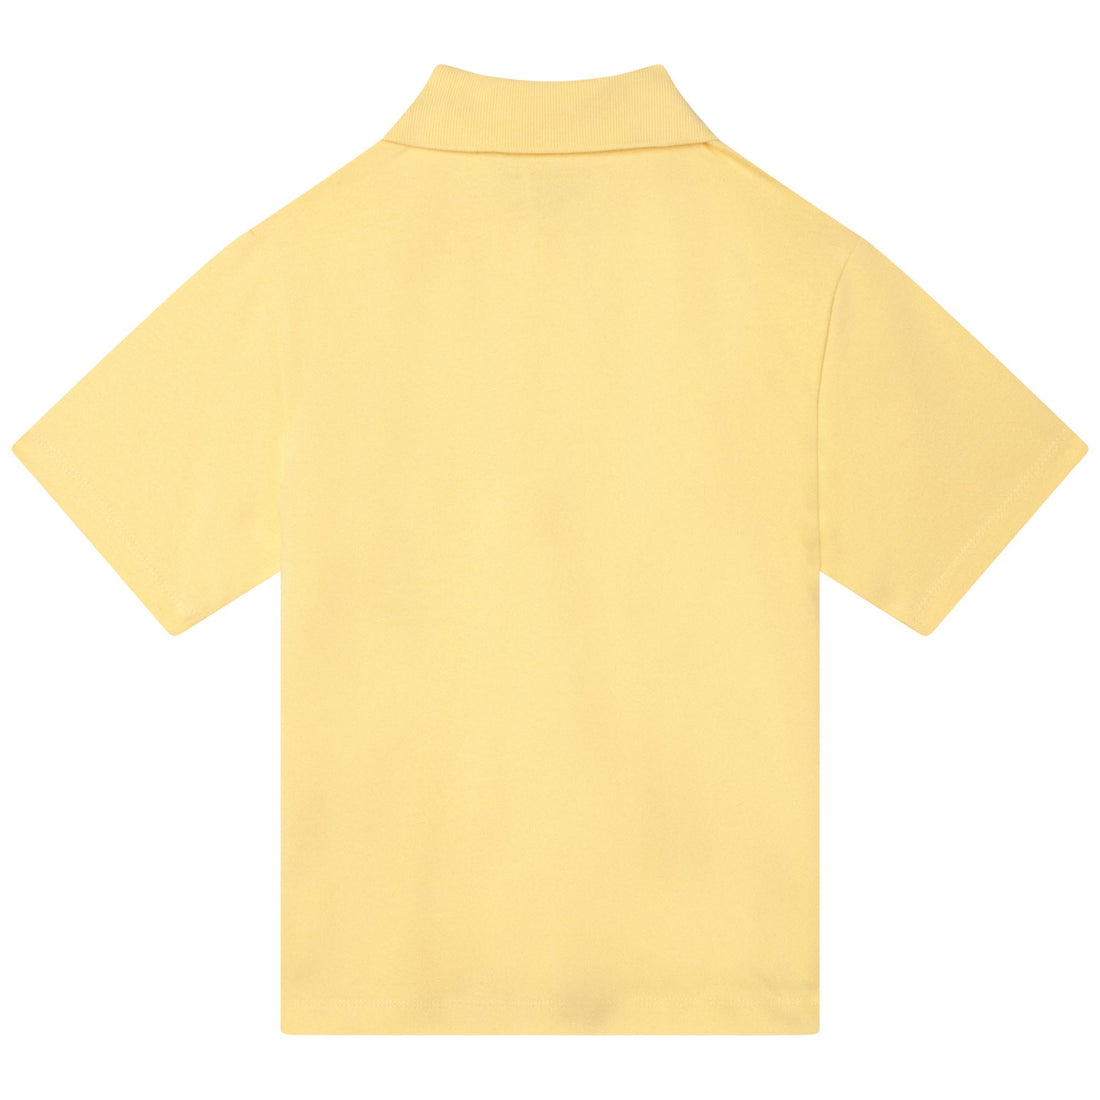 Kenzo Short Sleeve Polo Style: K25754